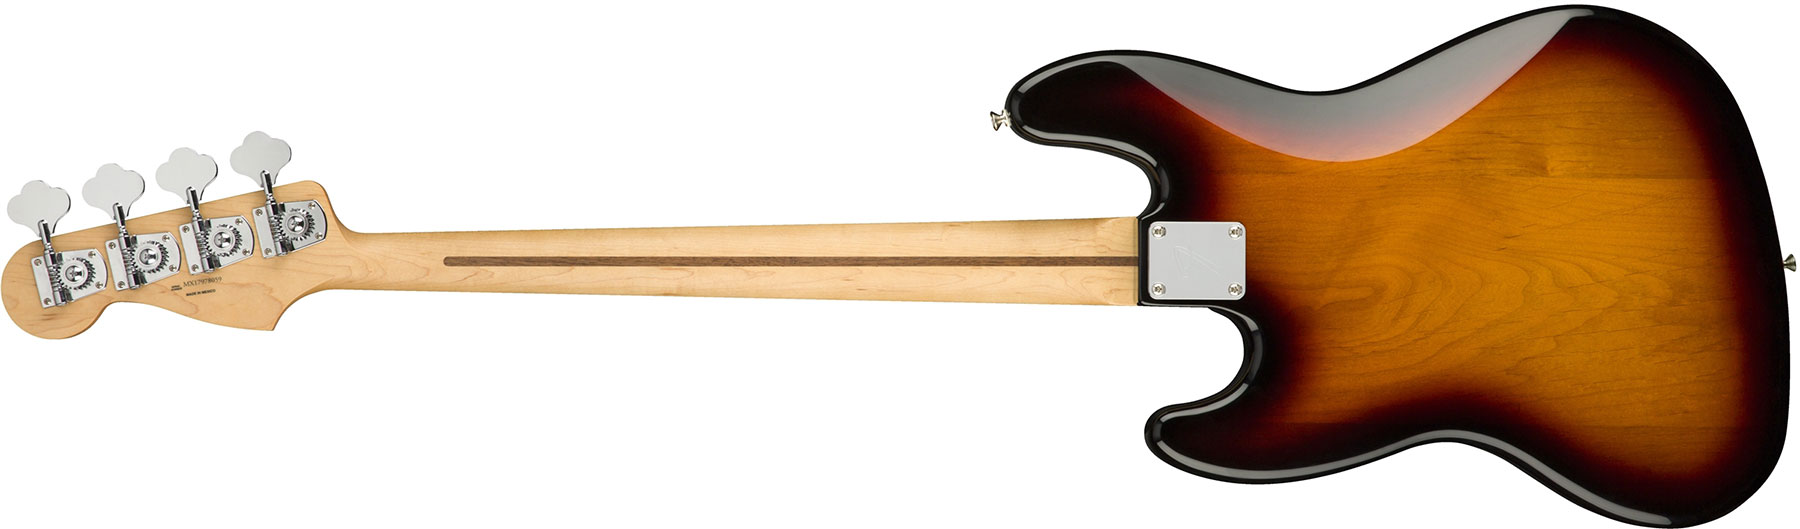 Fender Jazz Bass Player Fretless Mex Pf - 3-color Sunburst - Solid body electric bass - Variation 1